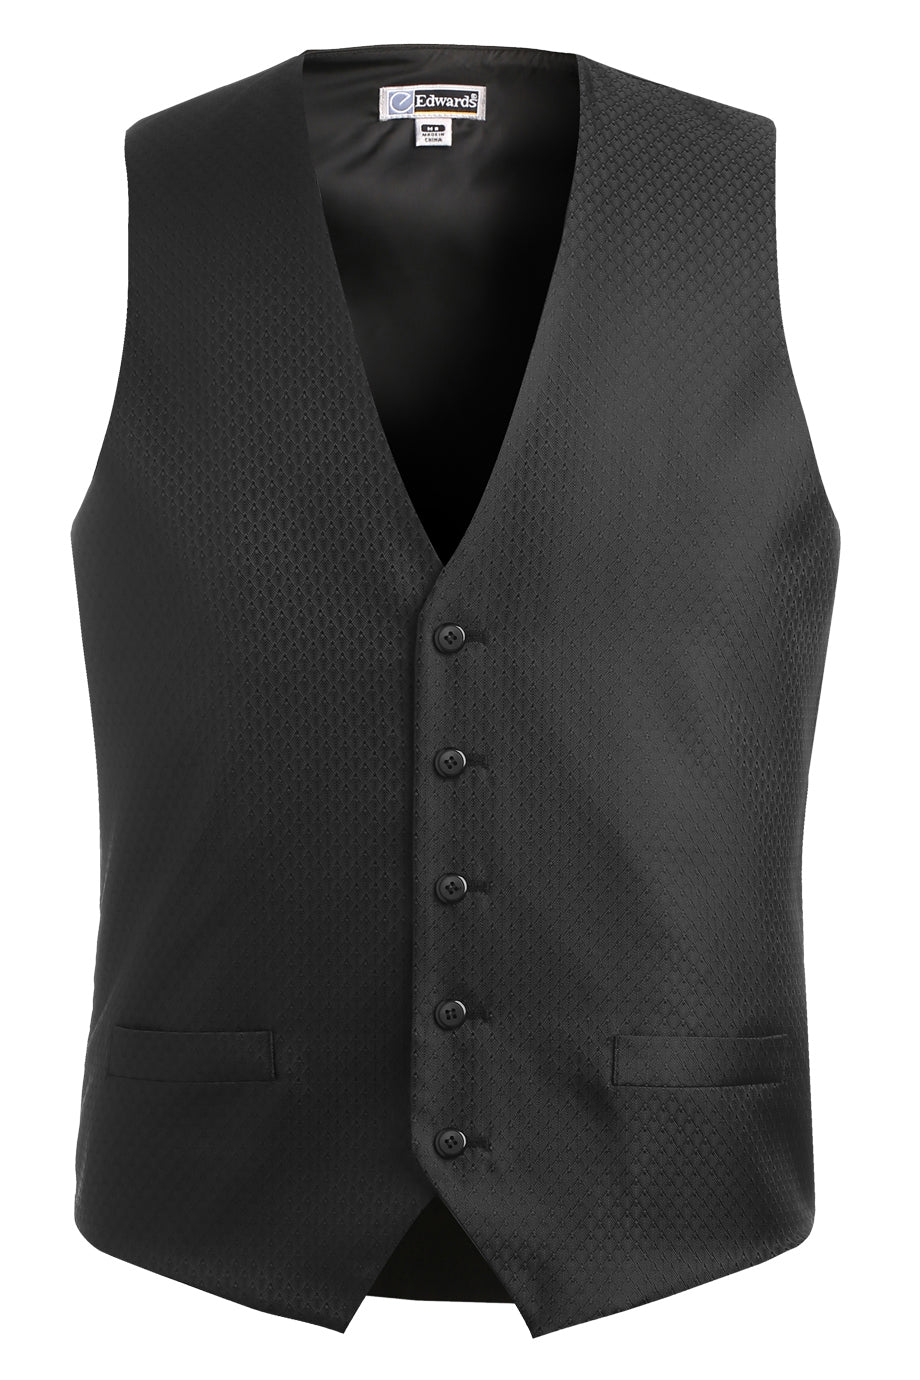 Edwards S Men's Black Diamond Brocade Vest